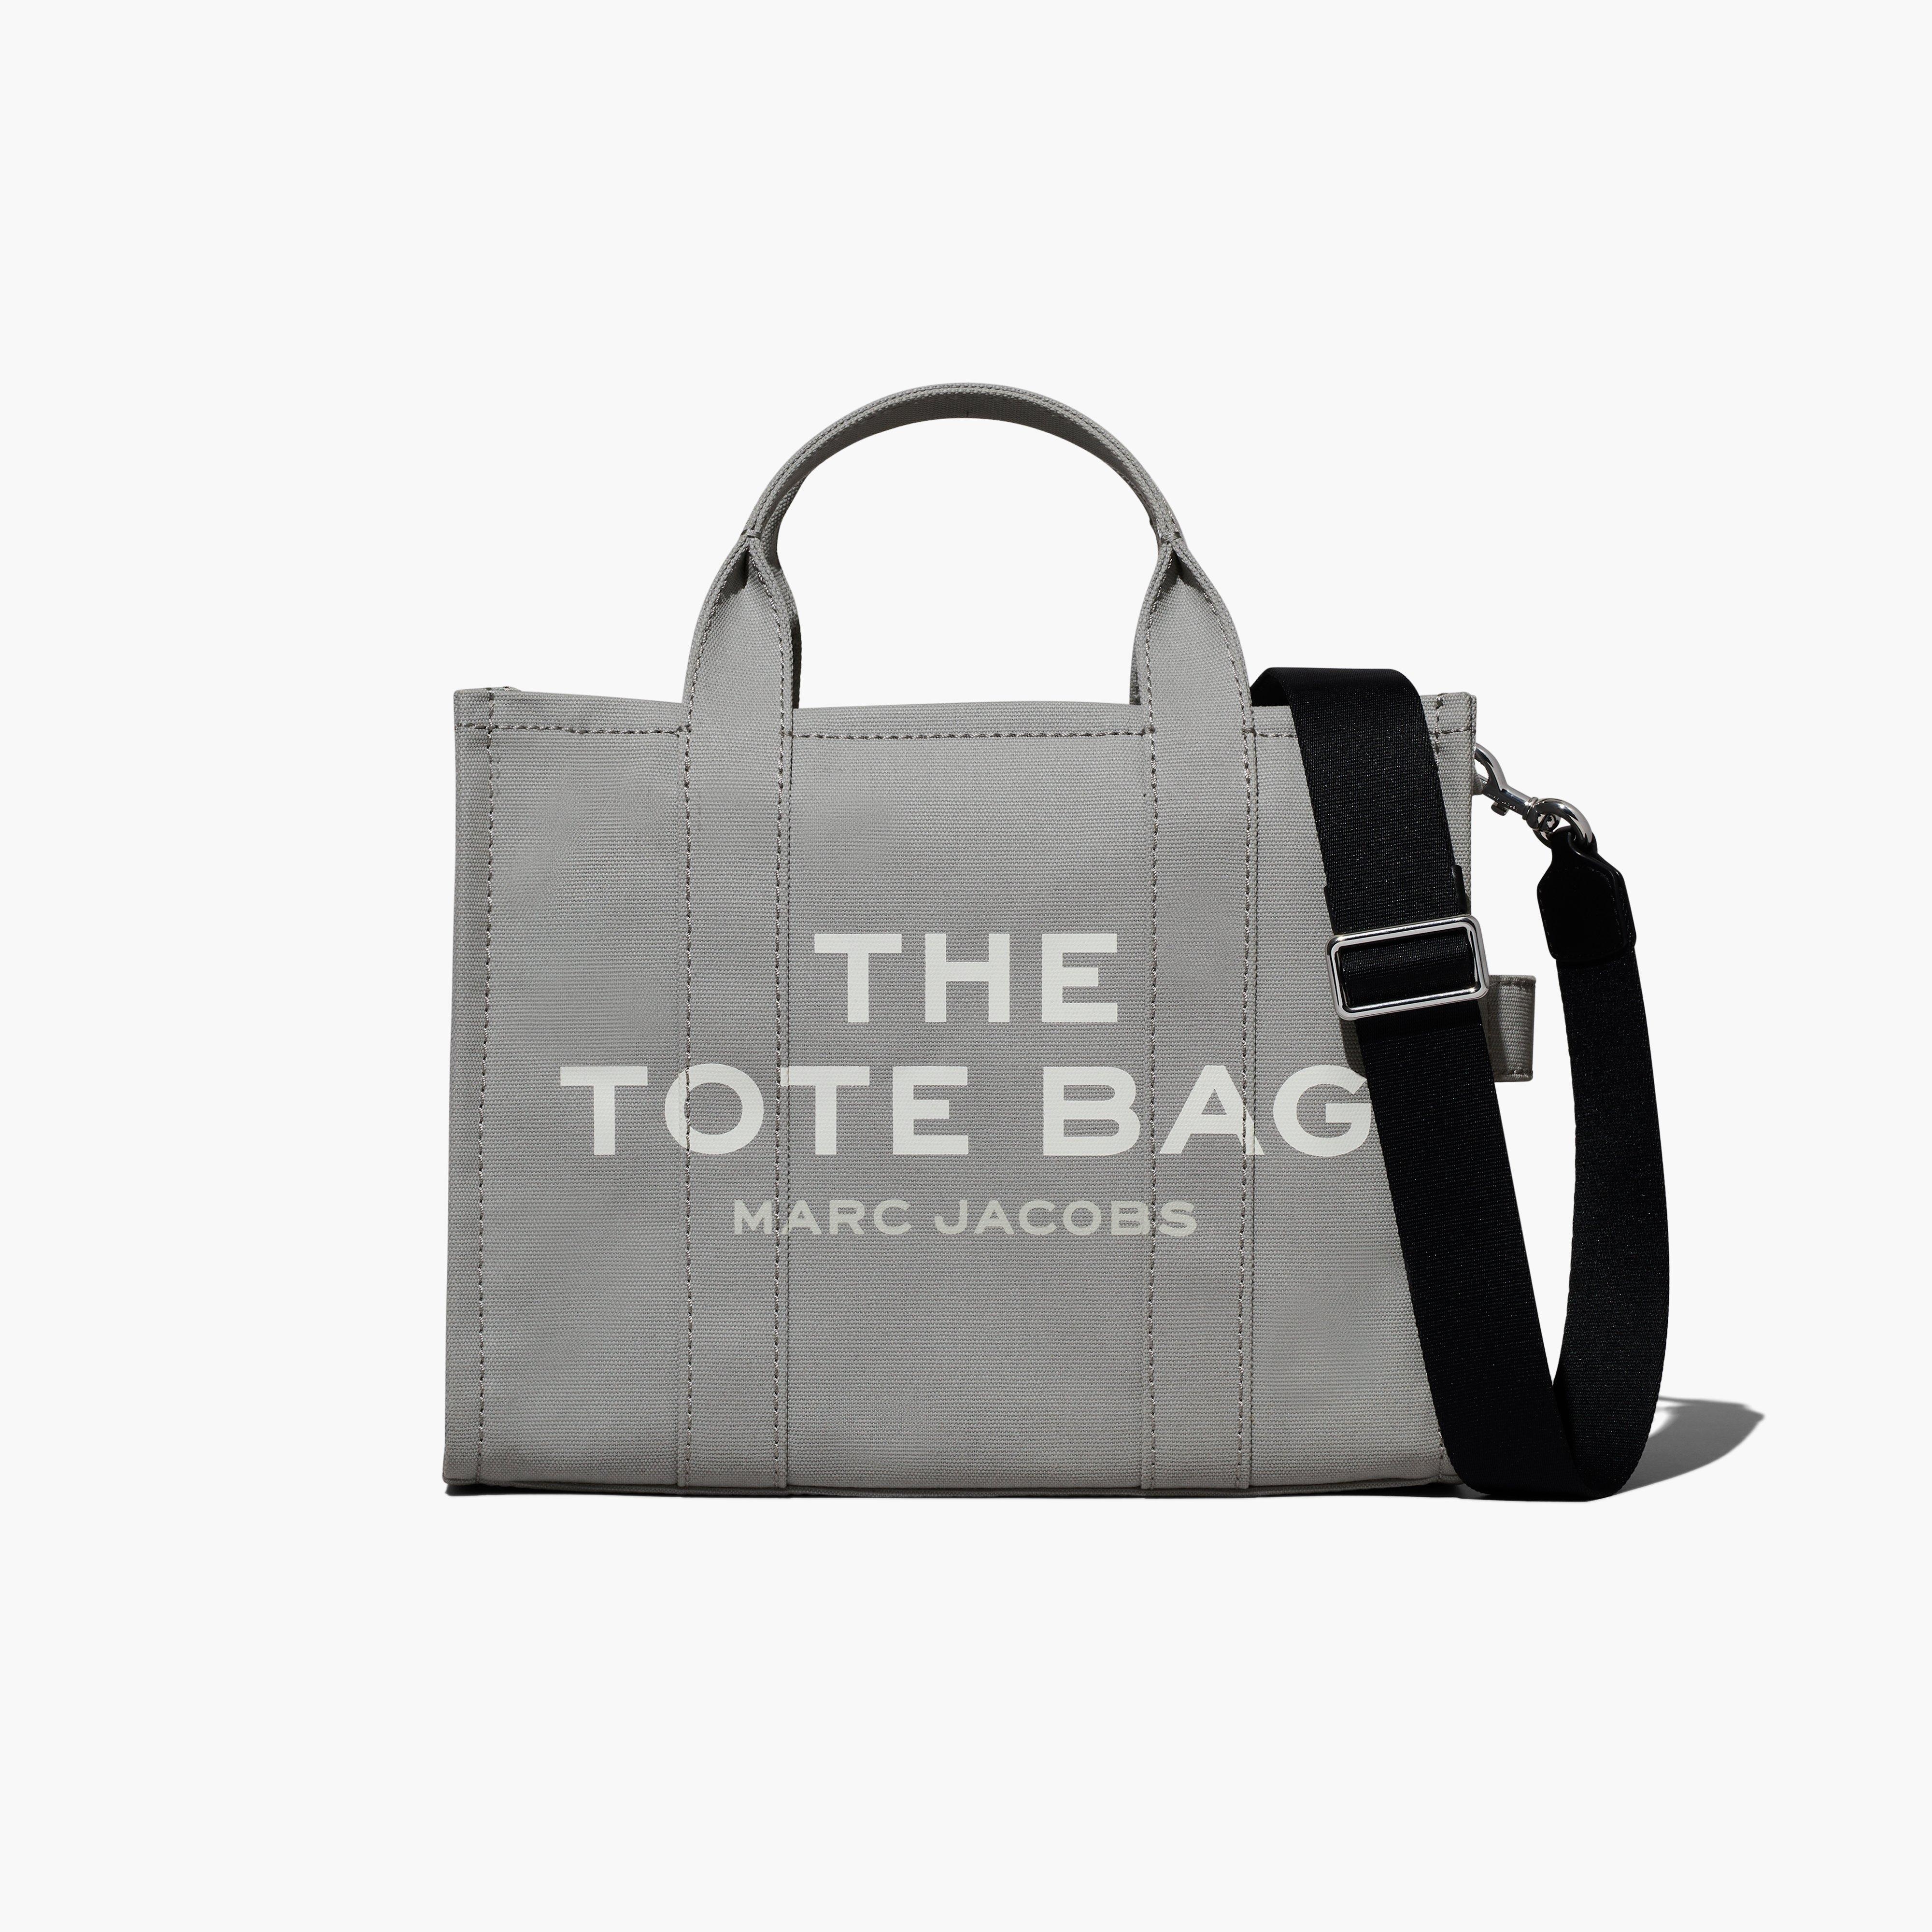 THE MEDIUM TOTE BAG - 1